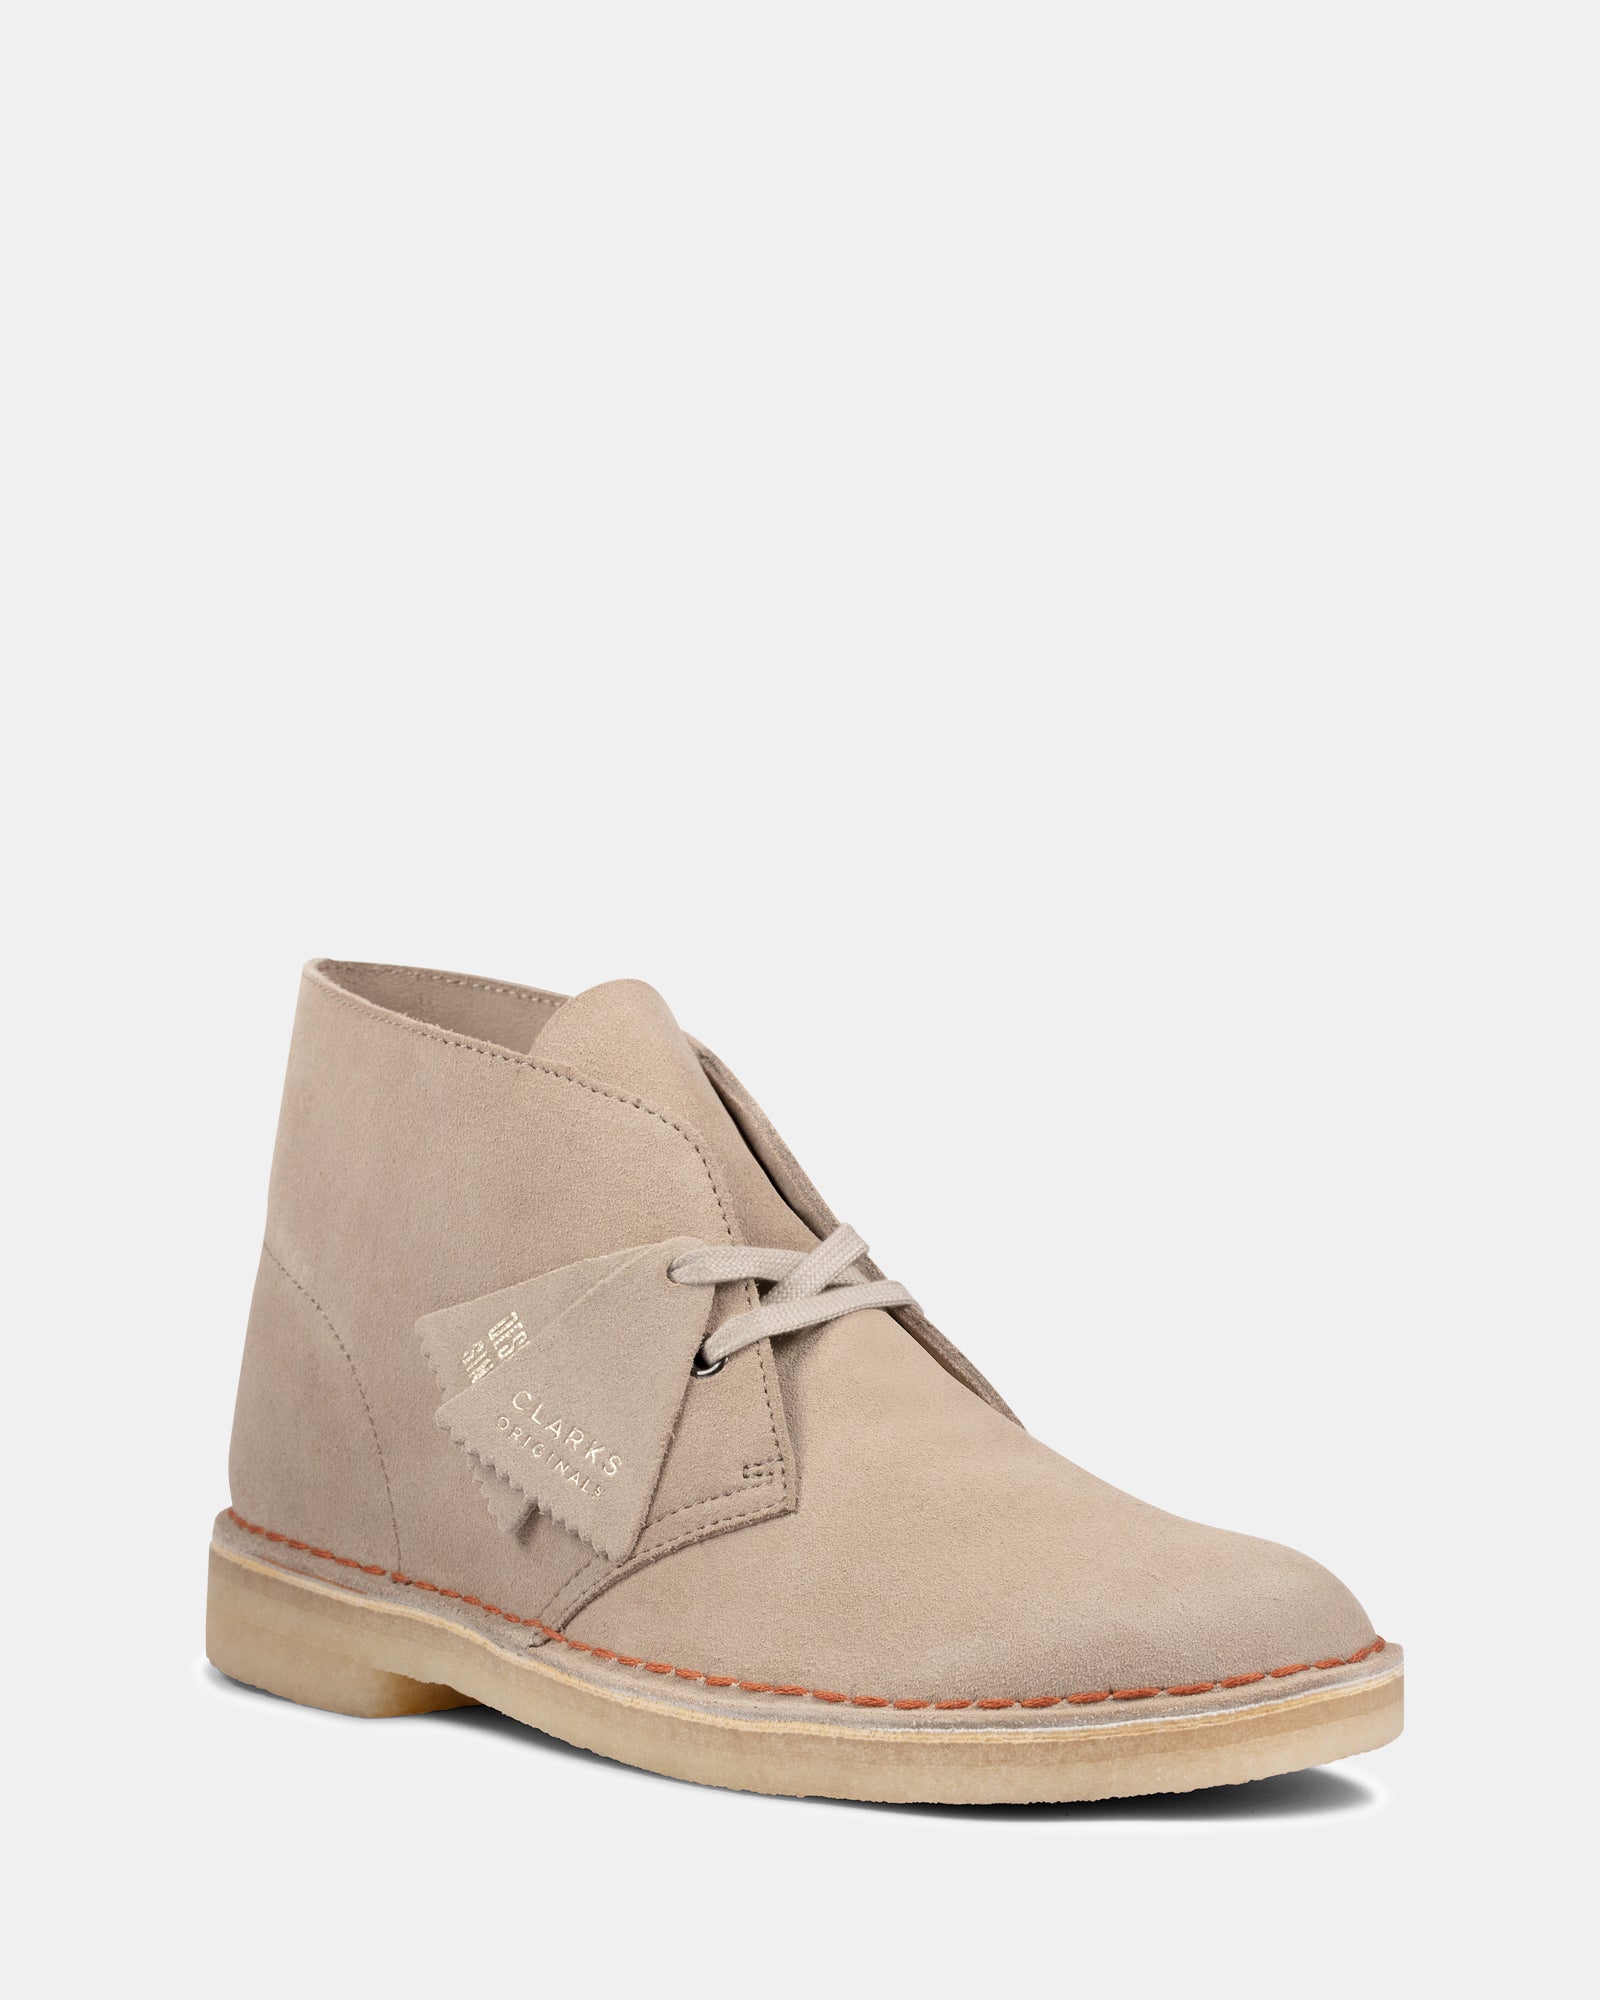 Clarks Desert Boot Shoes Size uk9 28 cm - ブーツ